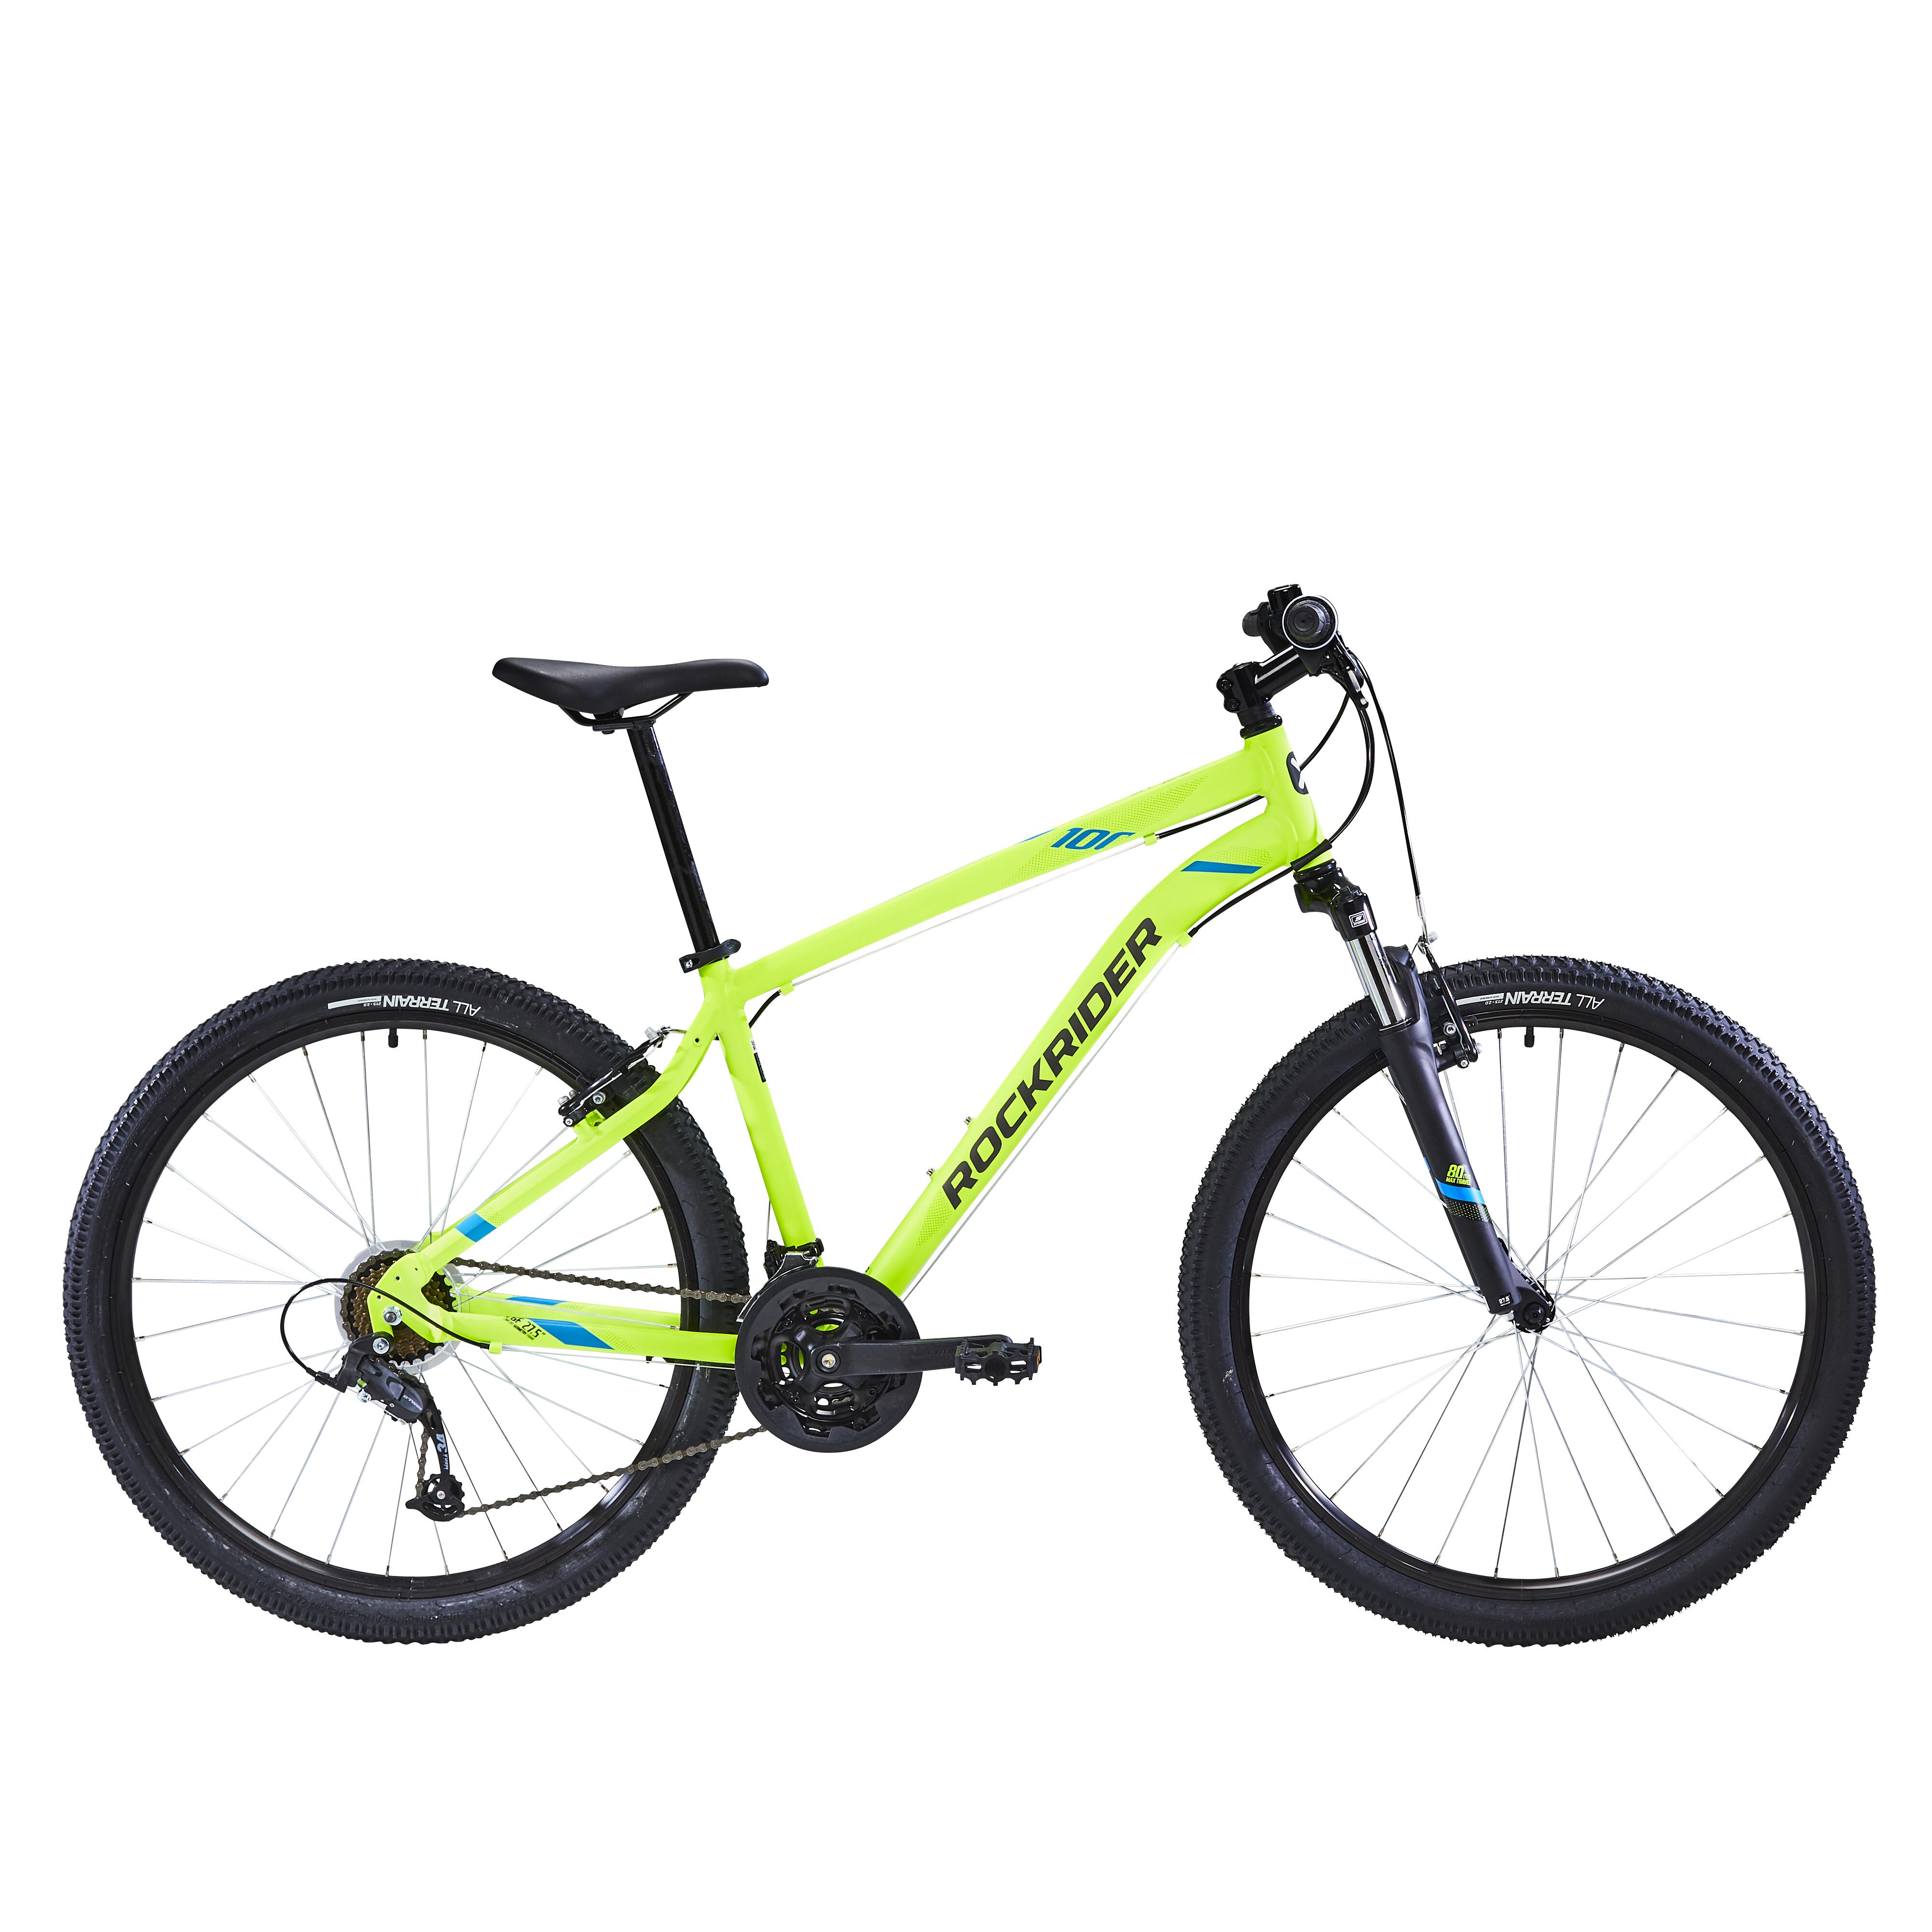 Bicicletă MTB ST 100 27,5″ Galben Fluorescent ROCKRIDER decathlon.ro